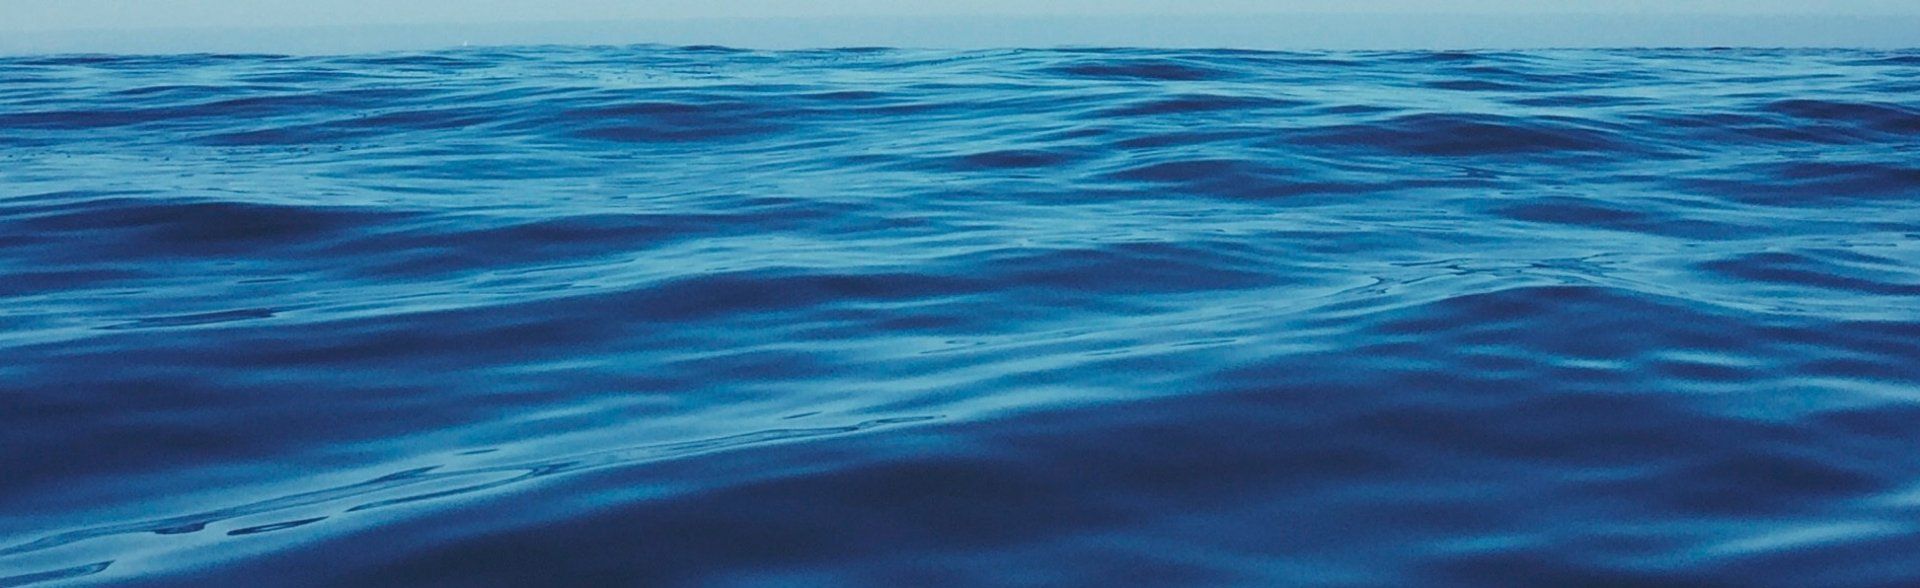 oceano blu - strategia esplorazione mercati